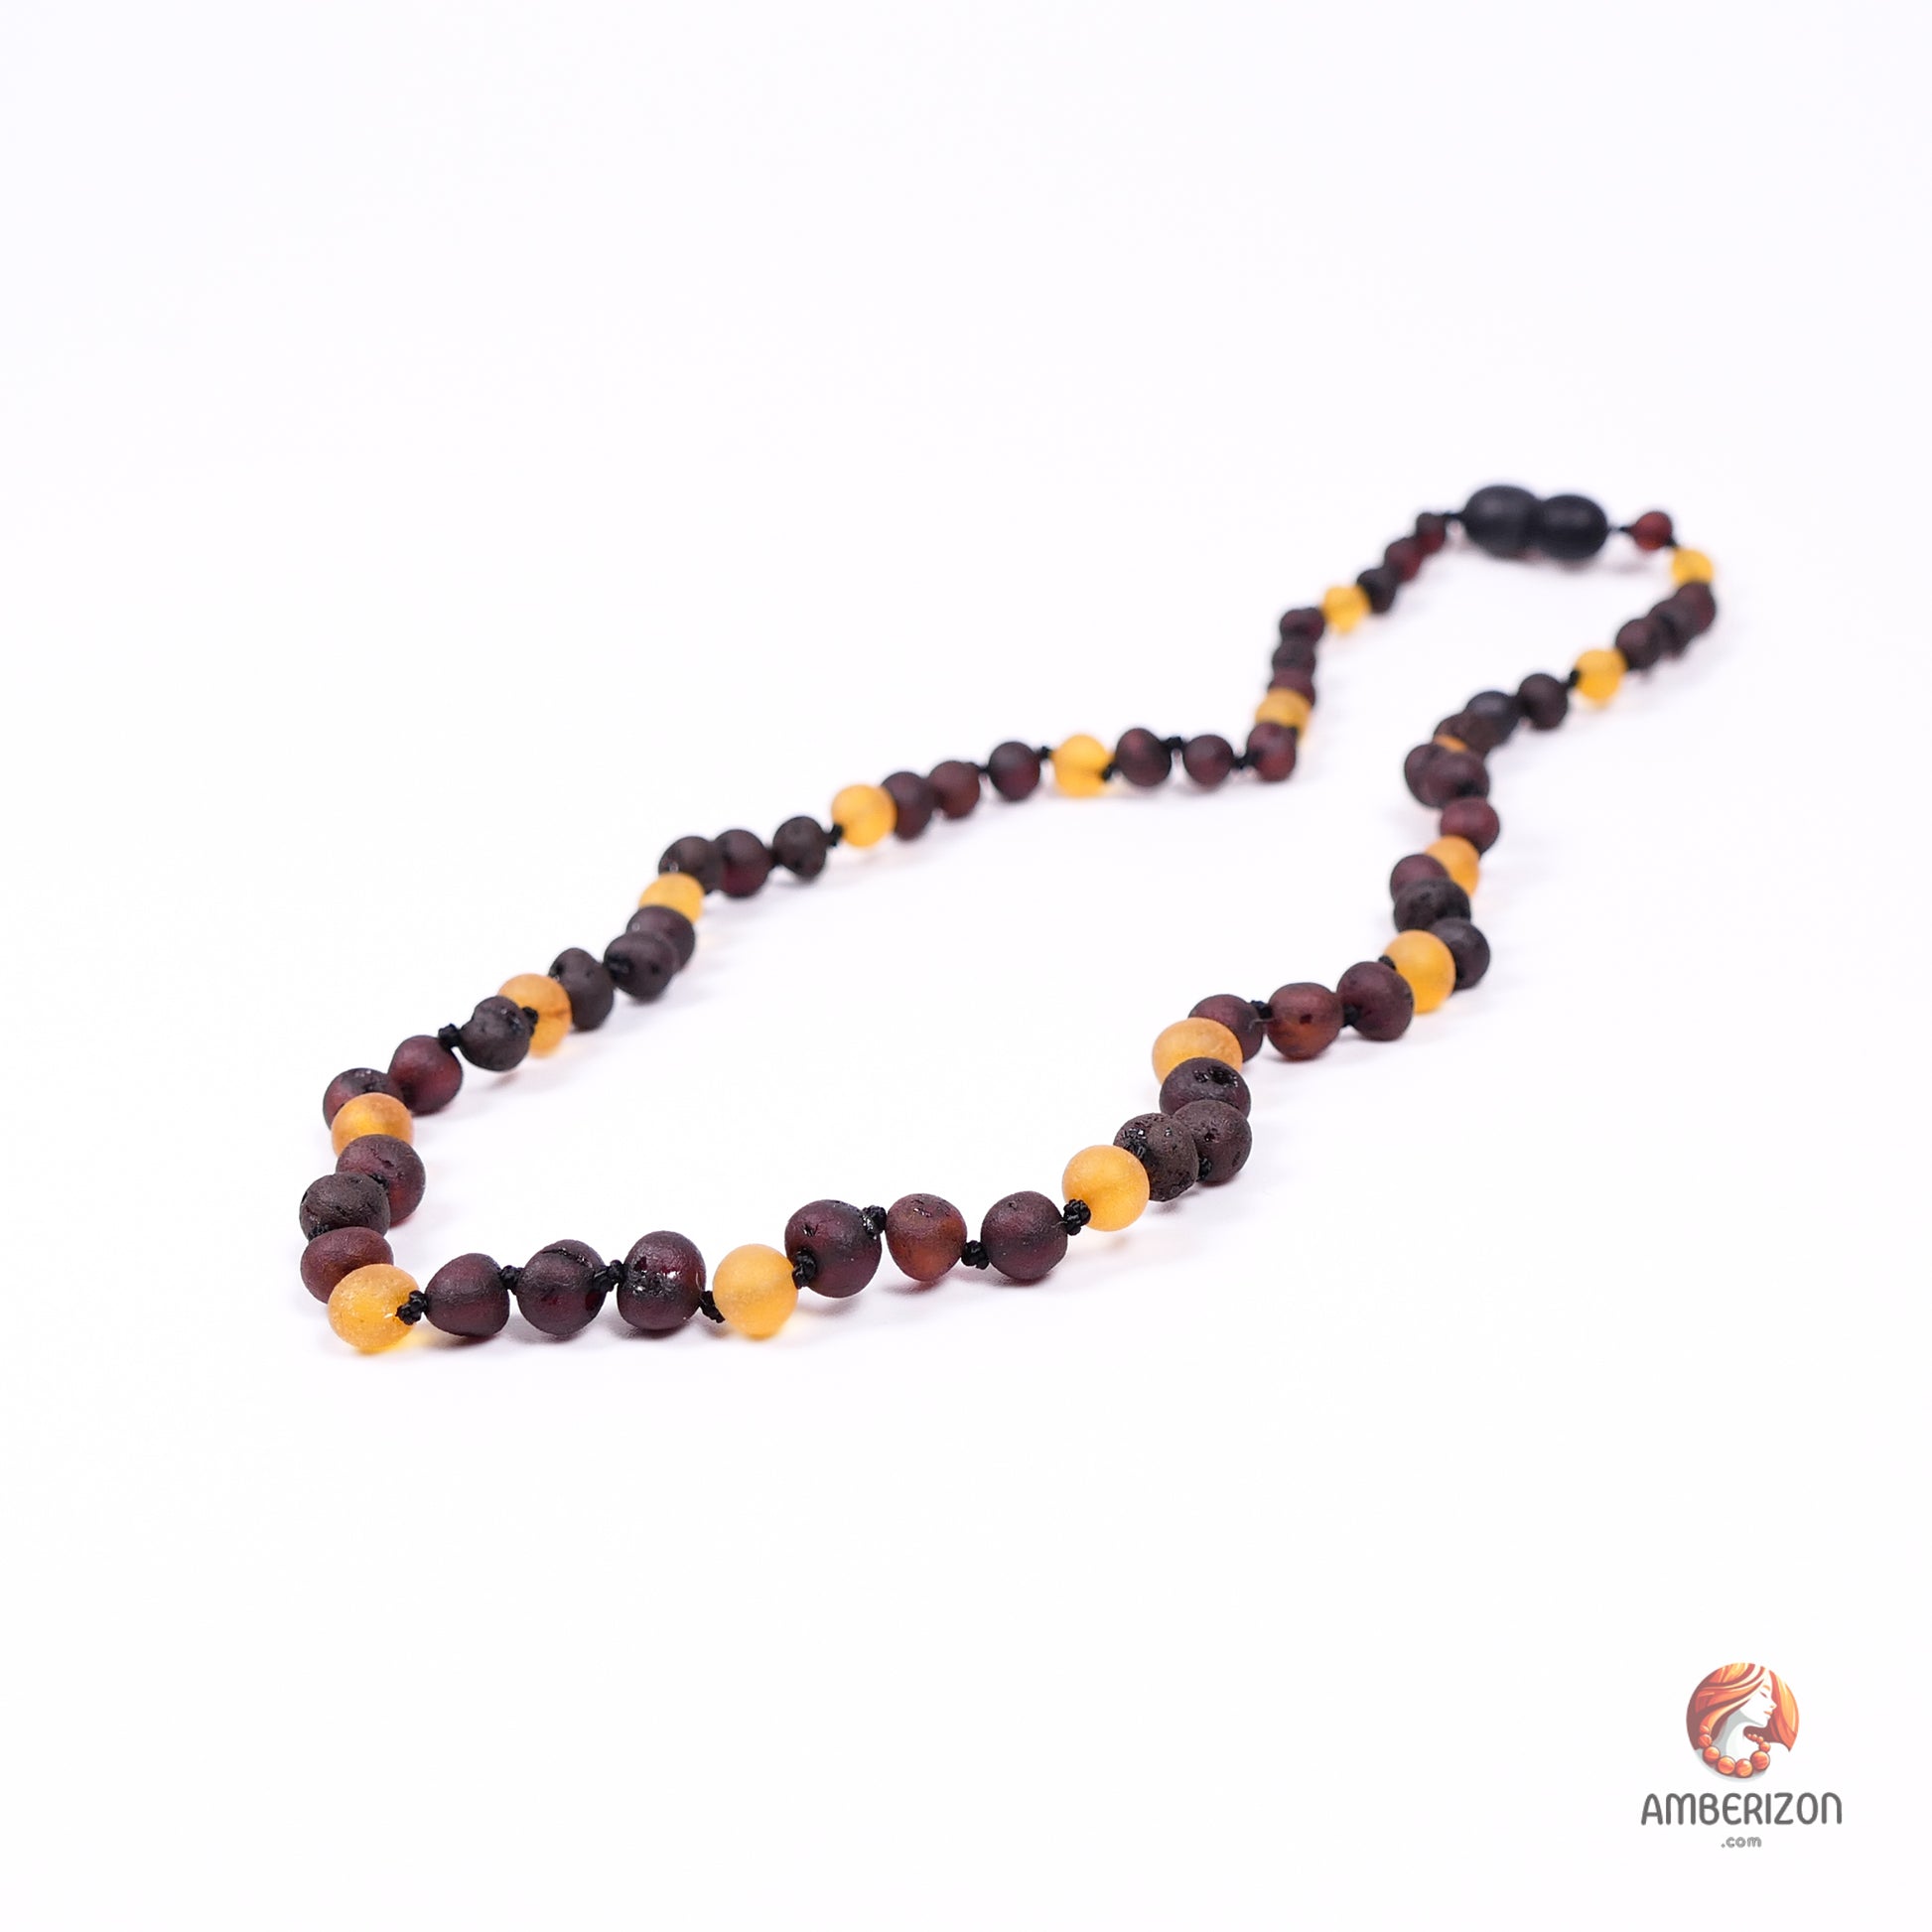 Minimalist women's necklace - Cherry and honey Baroque raw amber beads